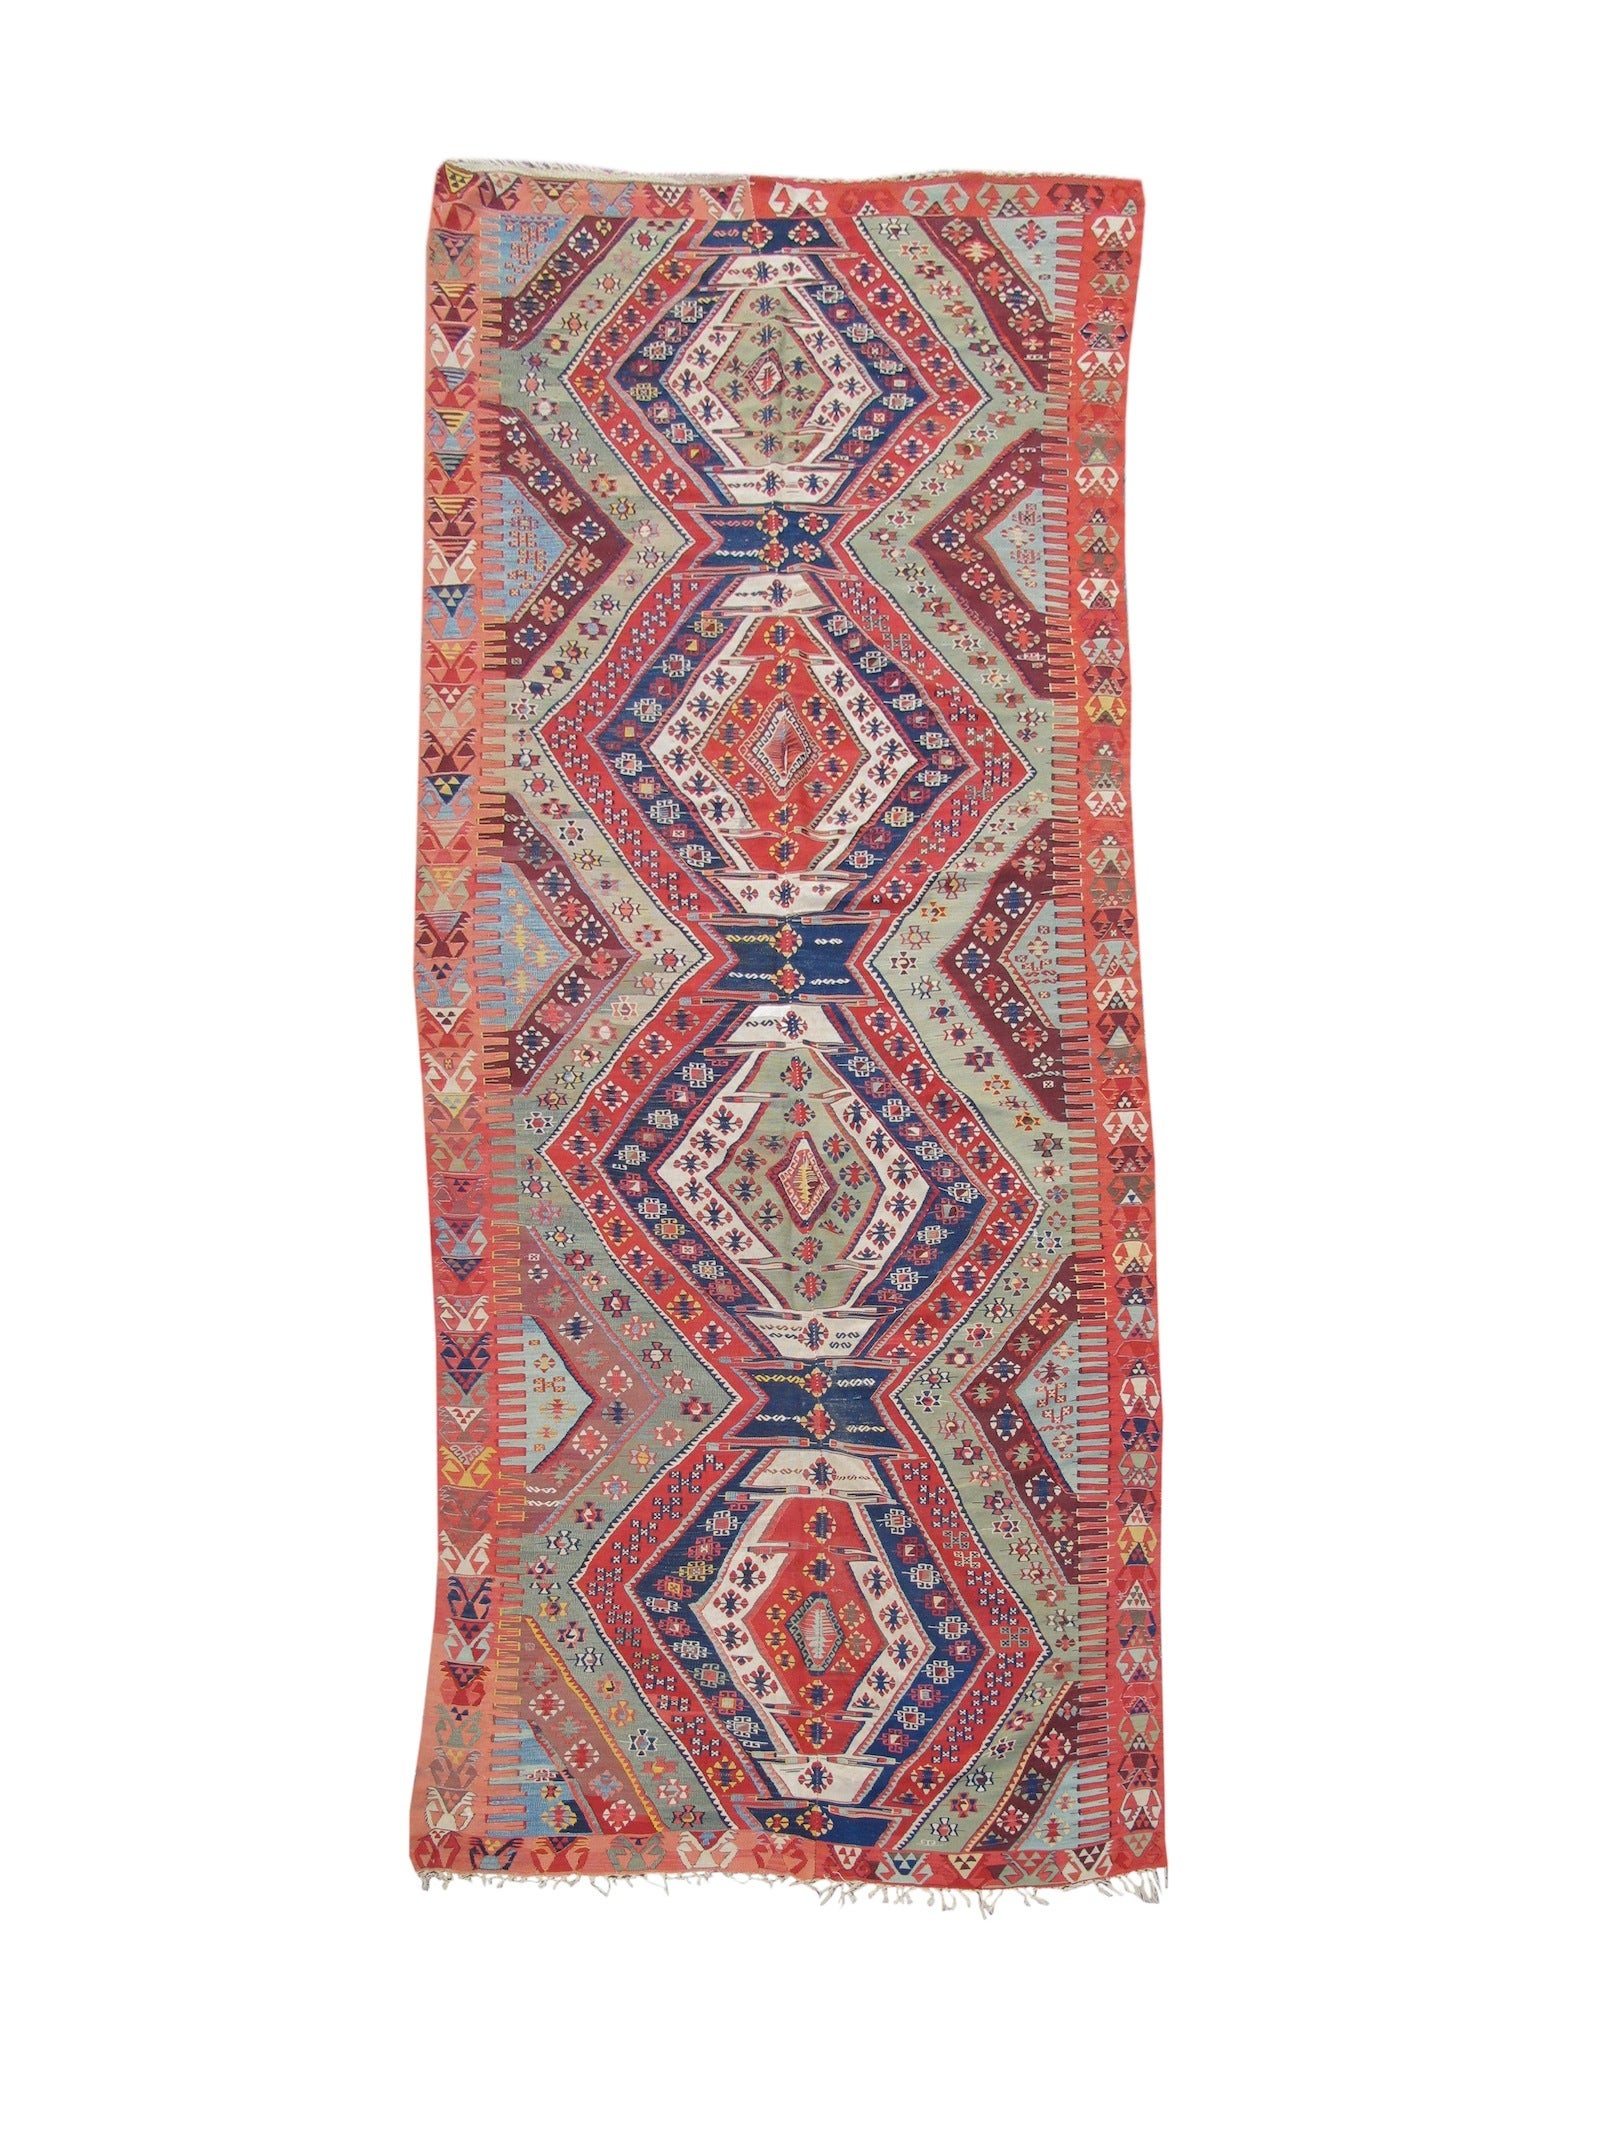 Antique Multi-Colored Anatolian Kilim Rug, Mid-19th Century  For Sale